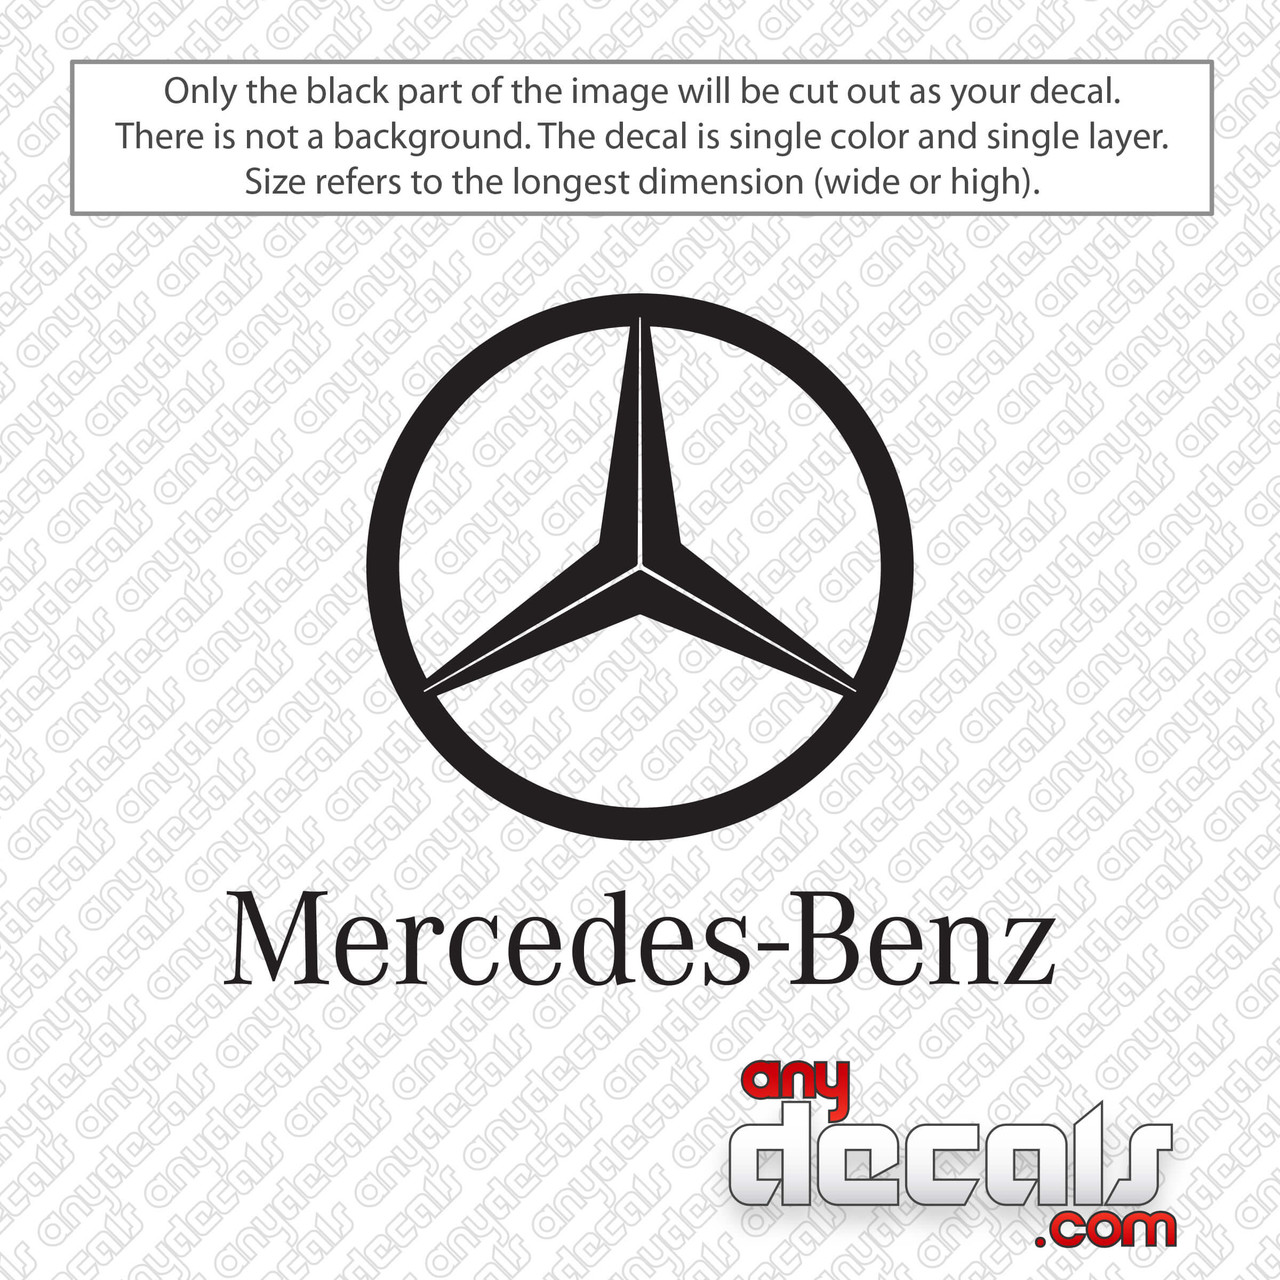 Buy Decal Sticker Mercedes Benz online